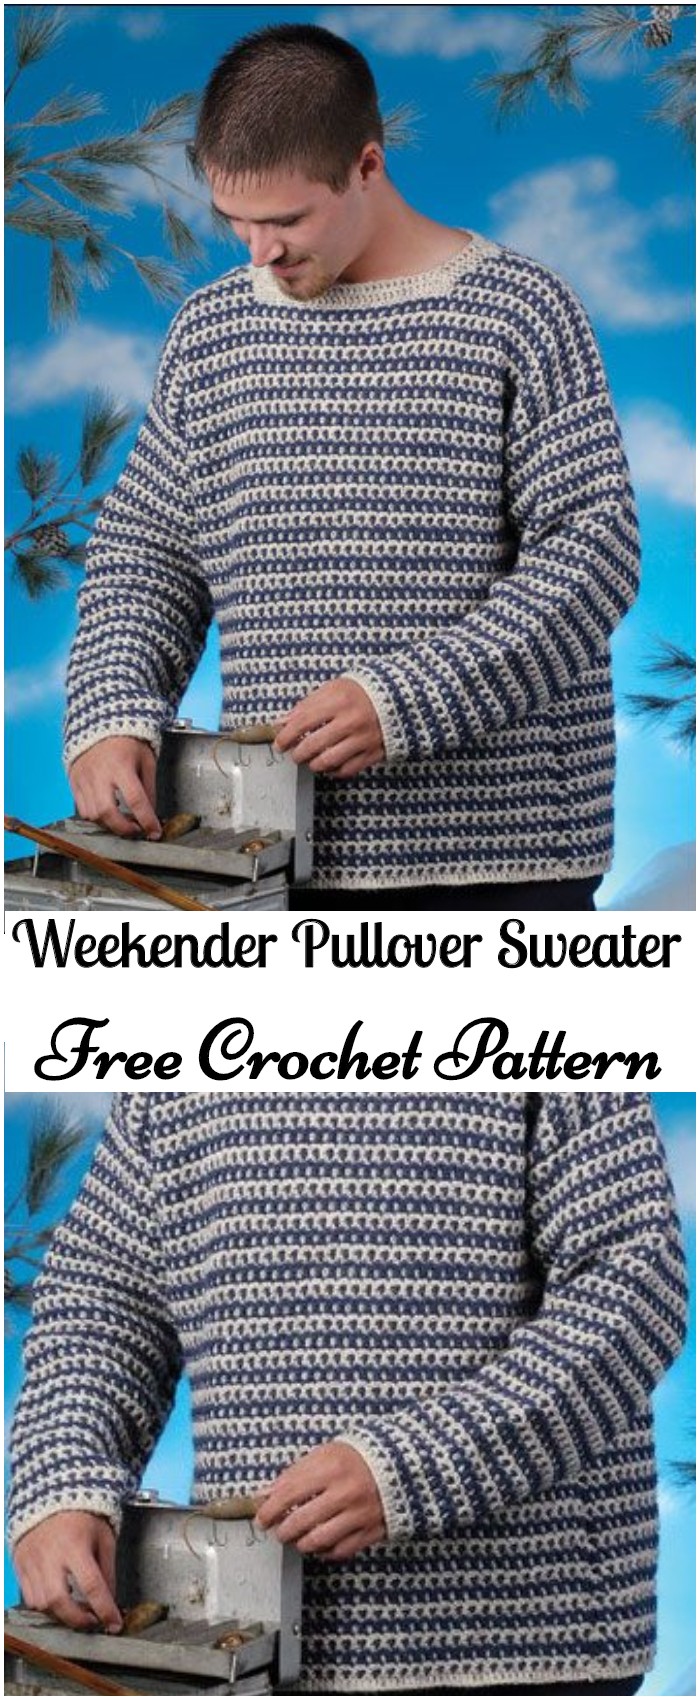 Crochet Weekender Pullover Sweater